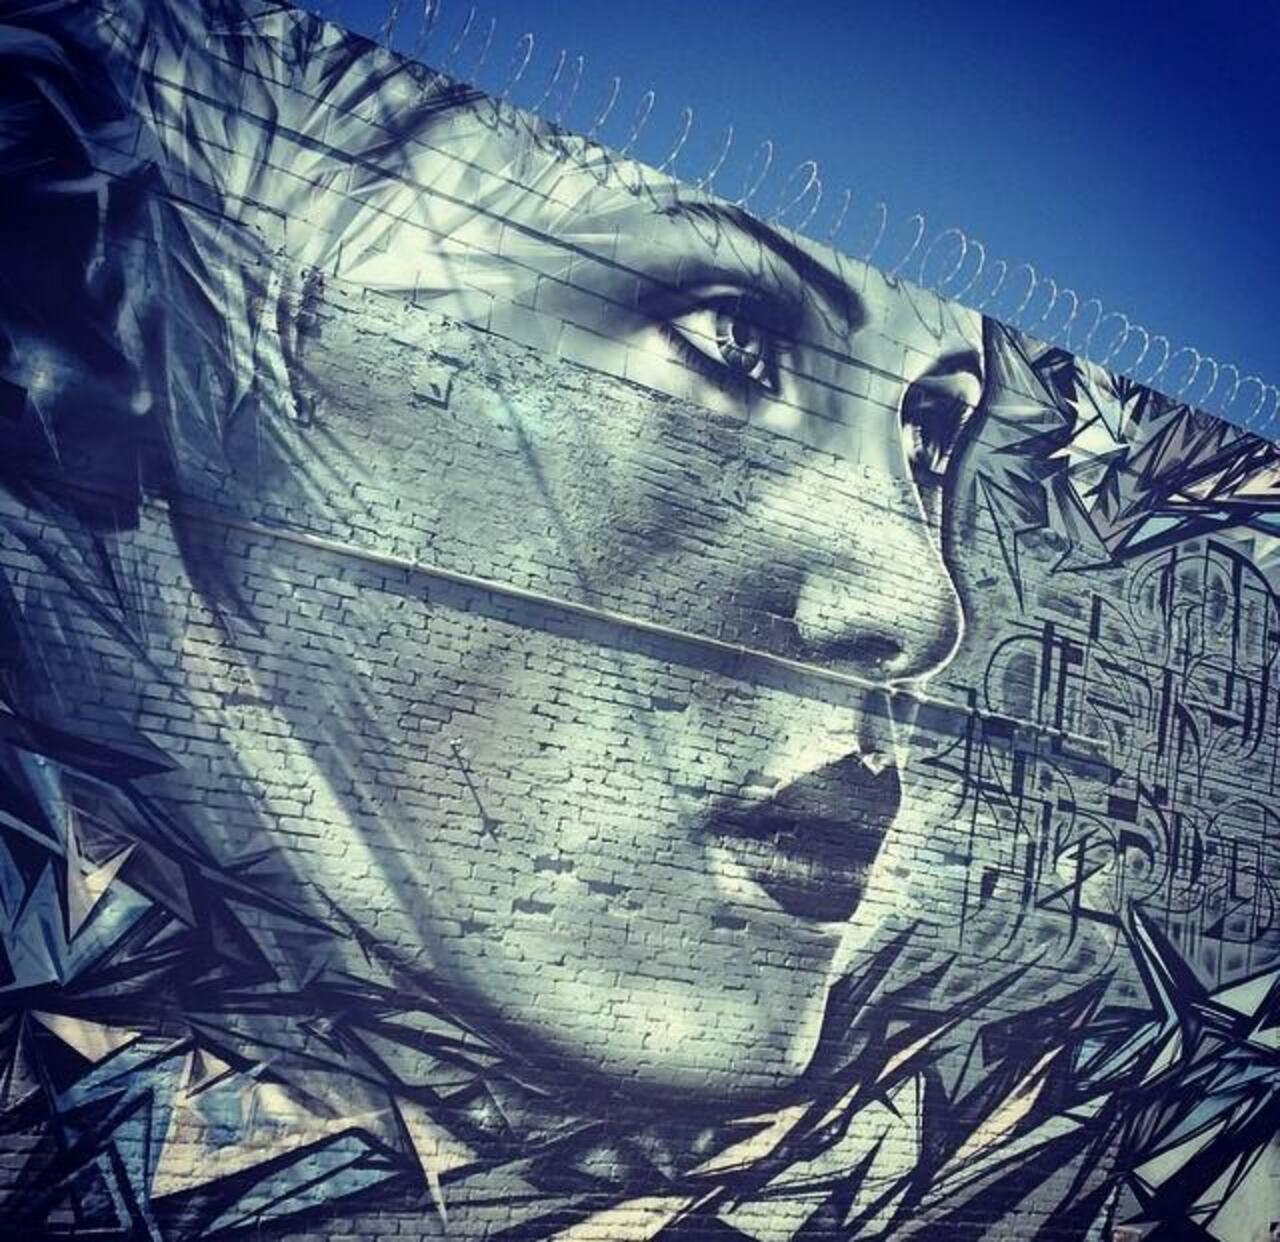 Artist @StarFighterA fabulous new Street Art mural located in Los Angeles. #art #mural #graffiti #streetart http://t.co/ILxiuLqvg8